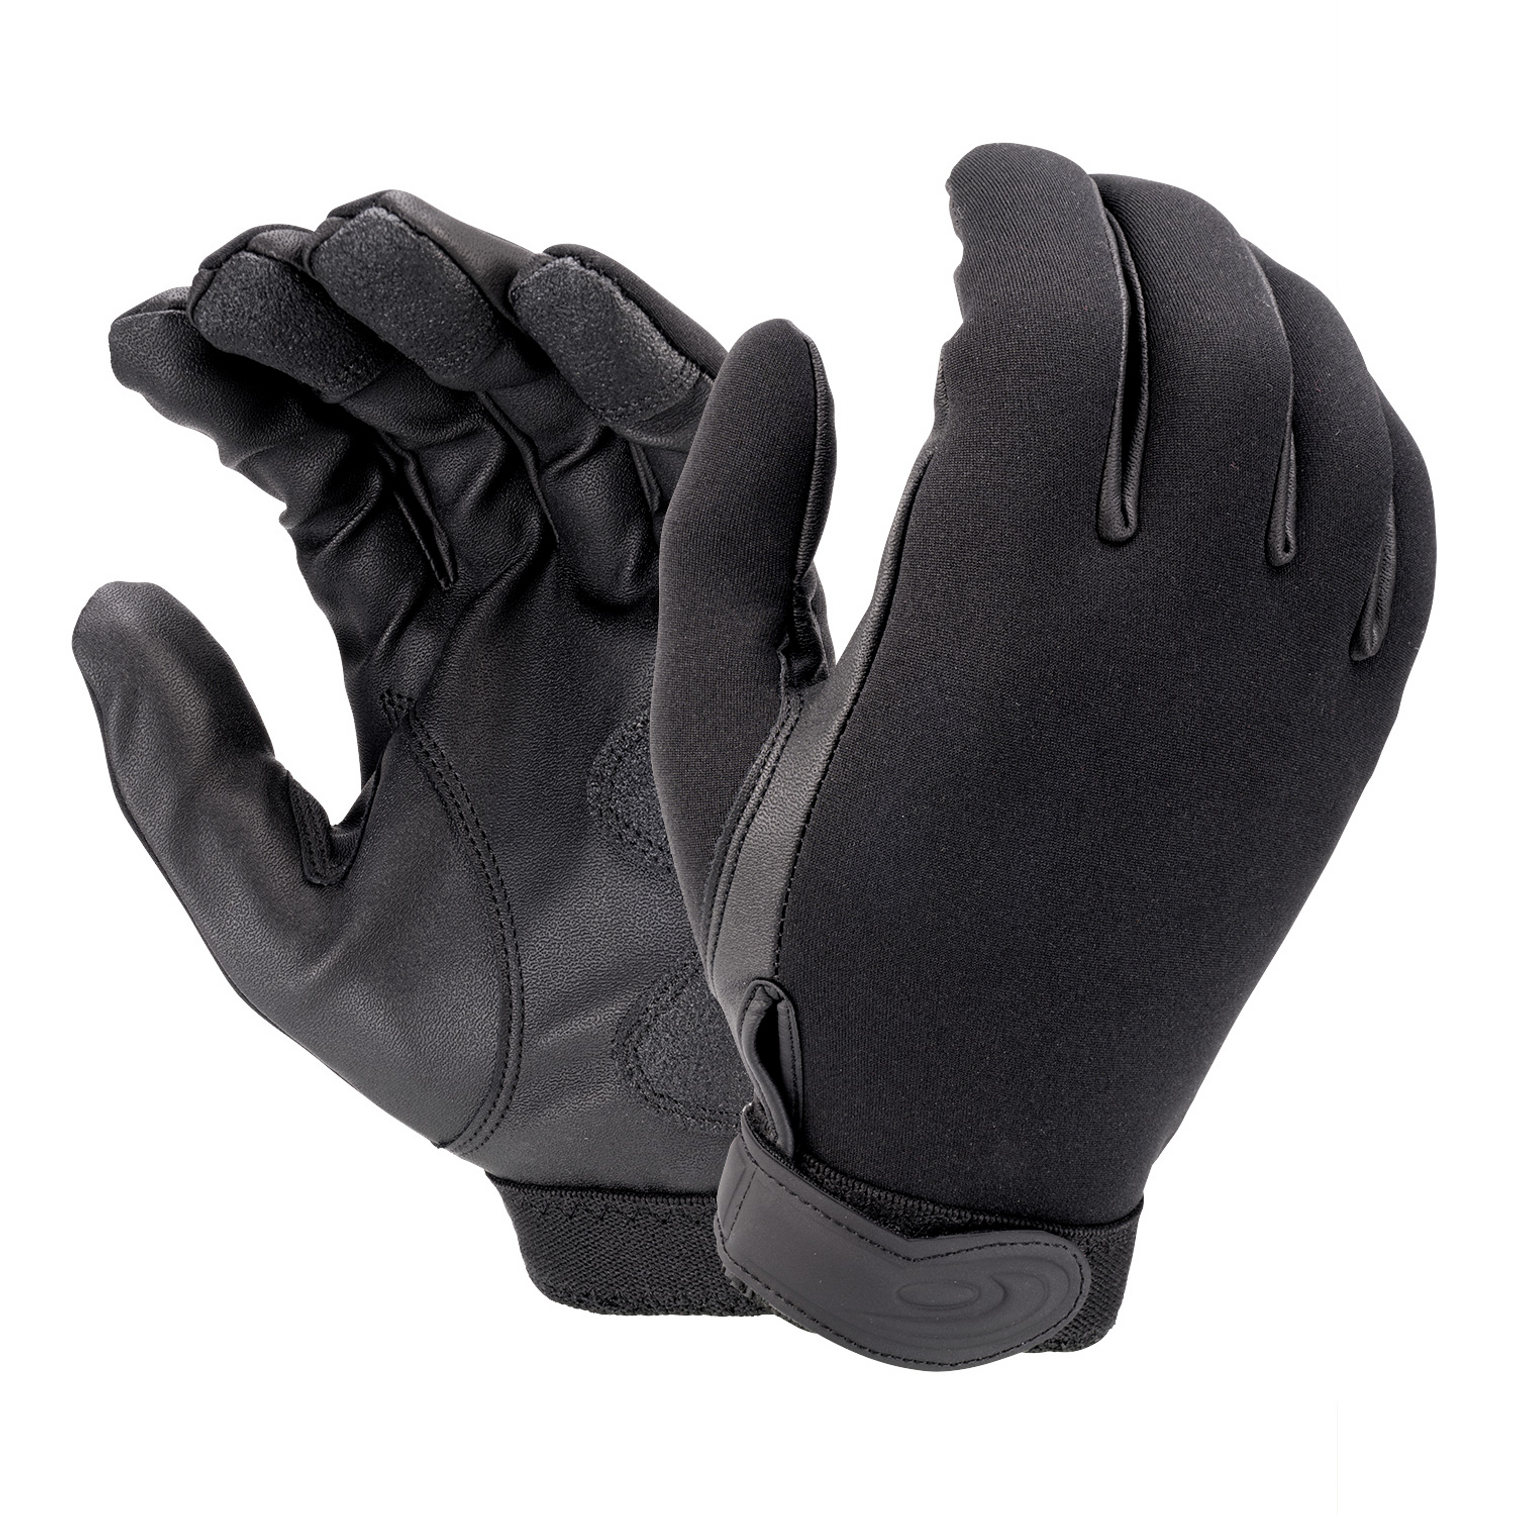 Specialist Police Duty Gloves - KRNS430XS